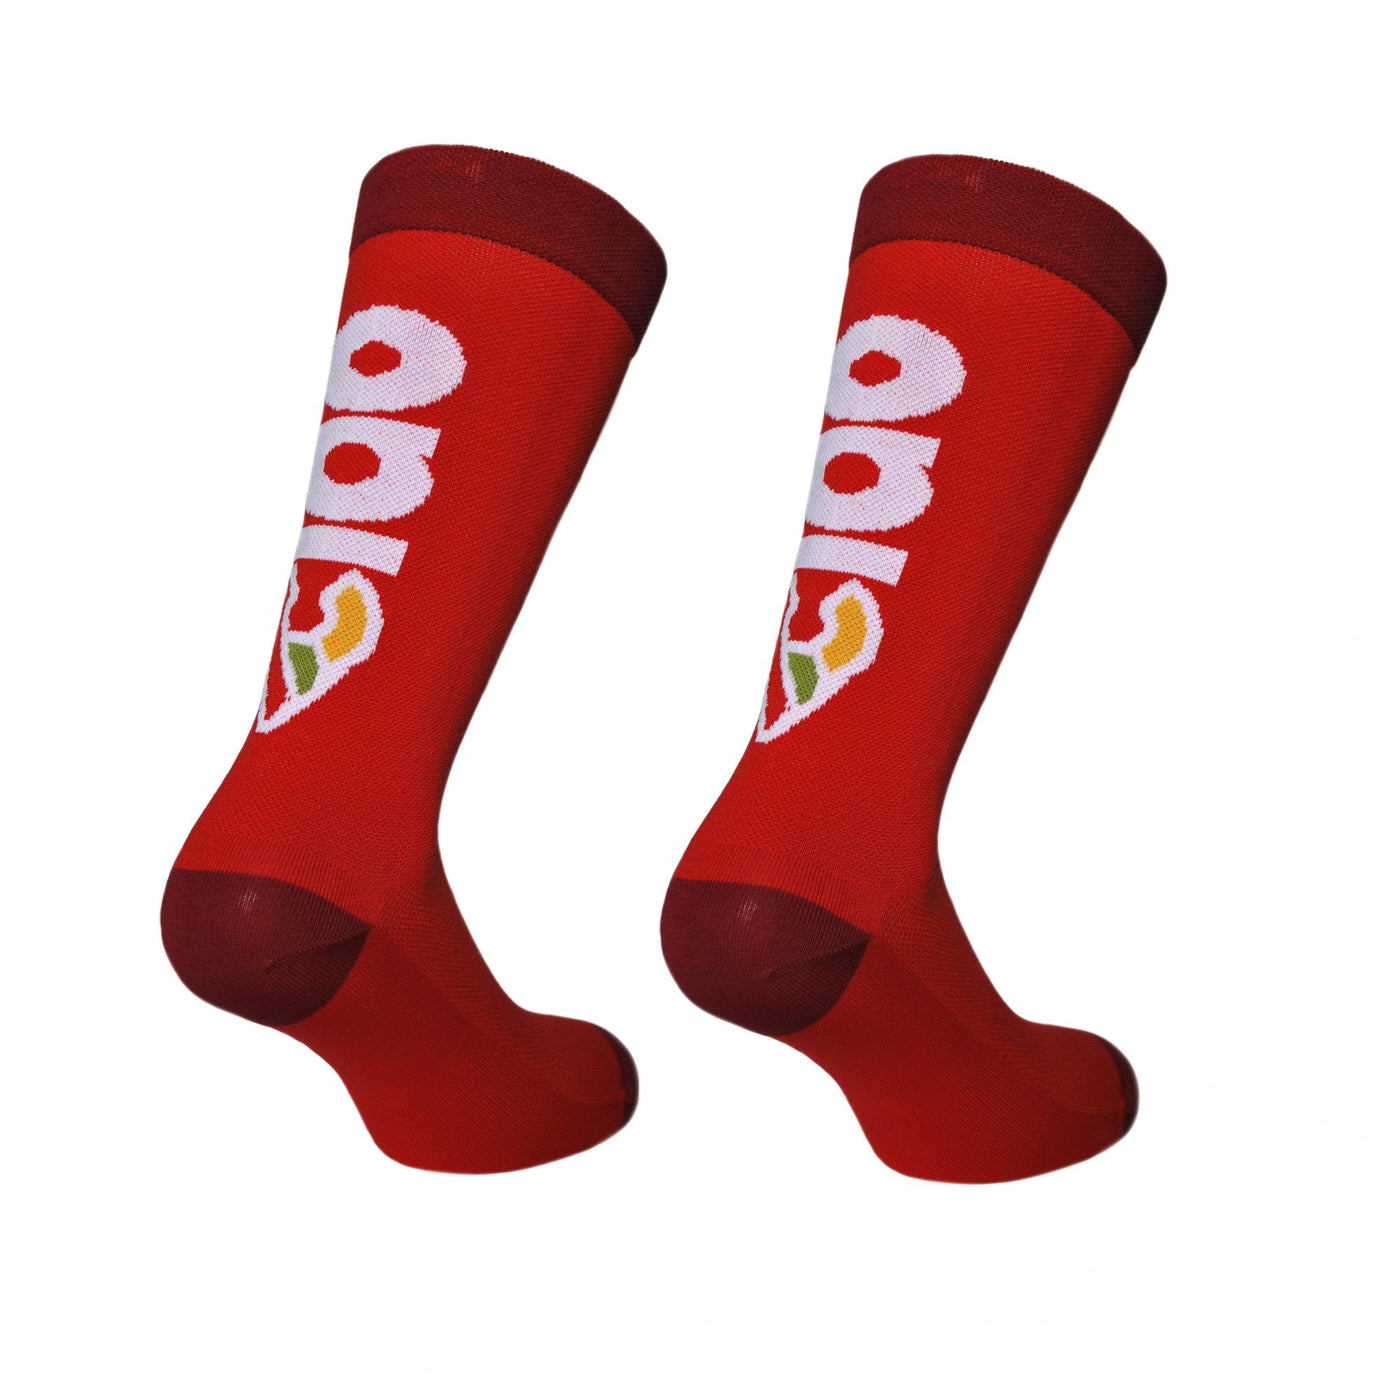 CIAO RED SOCKS, Socks, IMG.1